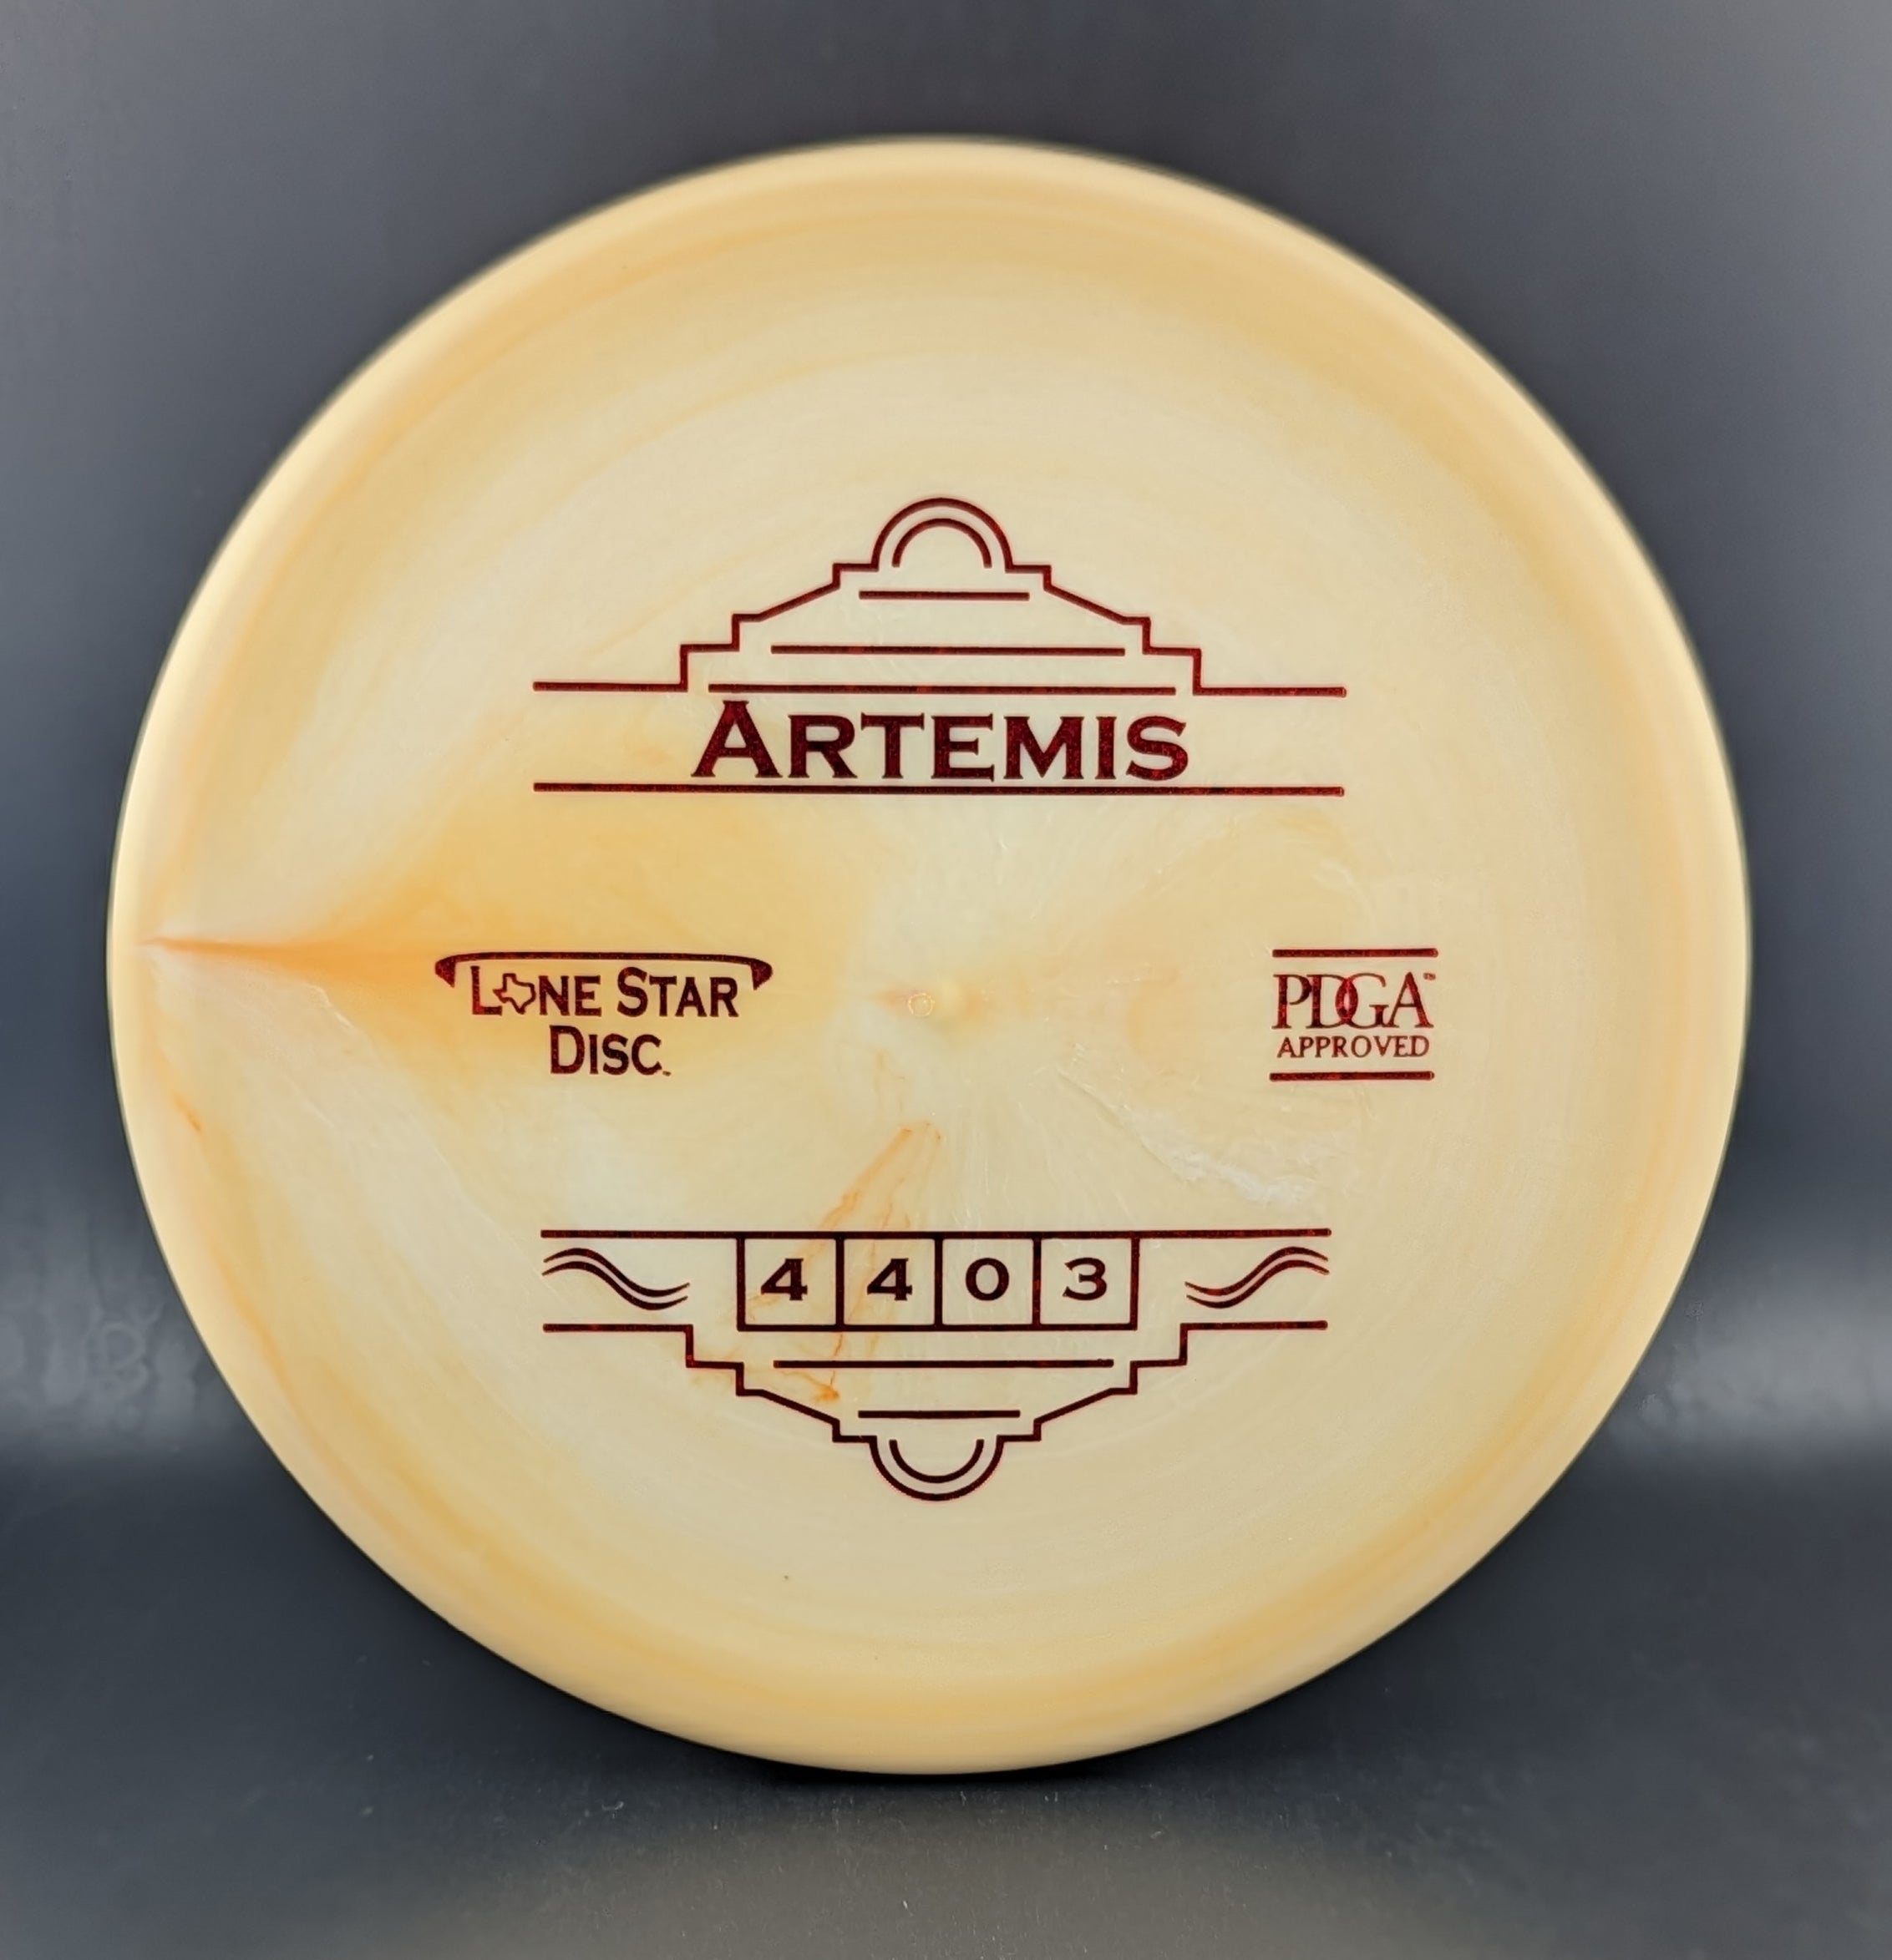 Lone Star Discs Bravo Artemis